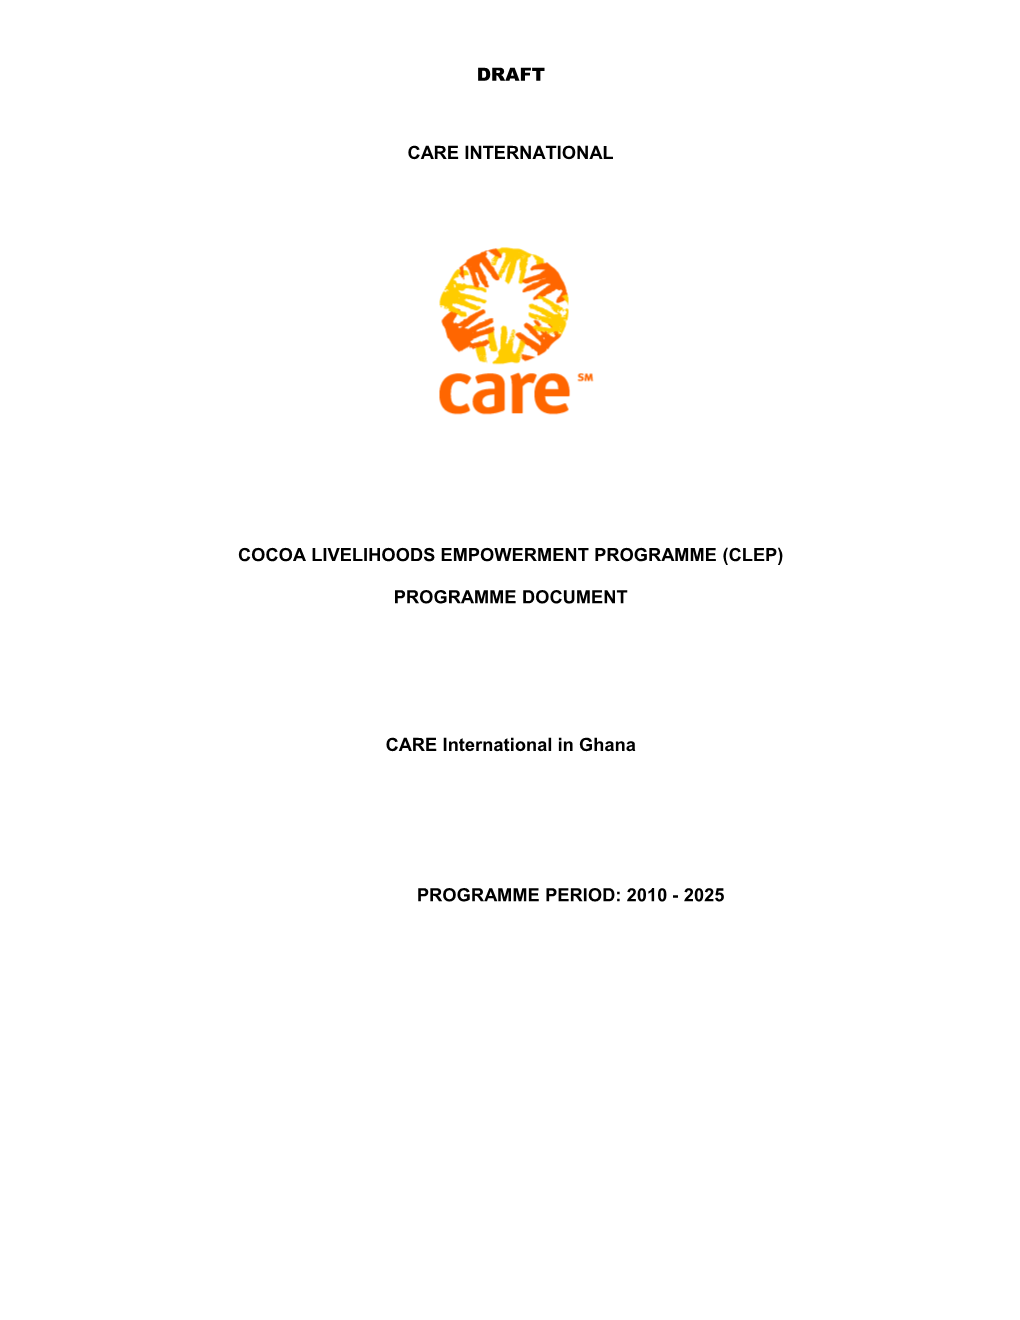 Cocoa Livelihoods Empowerment Programme (Clep)